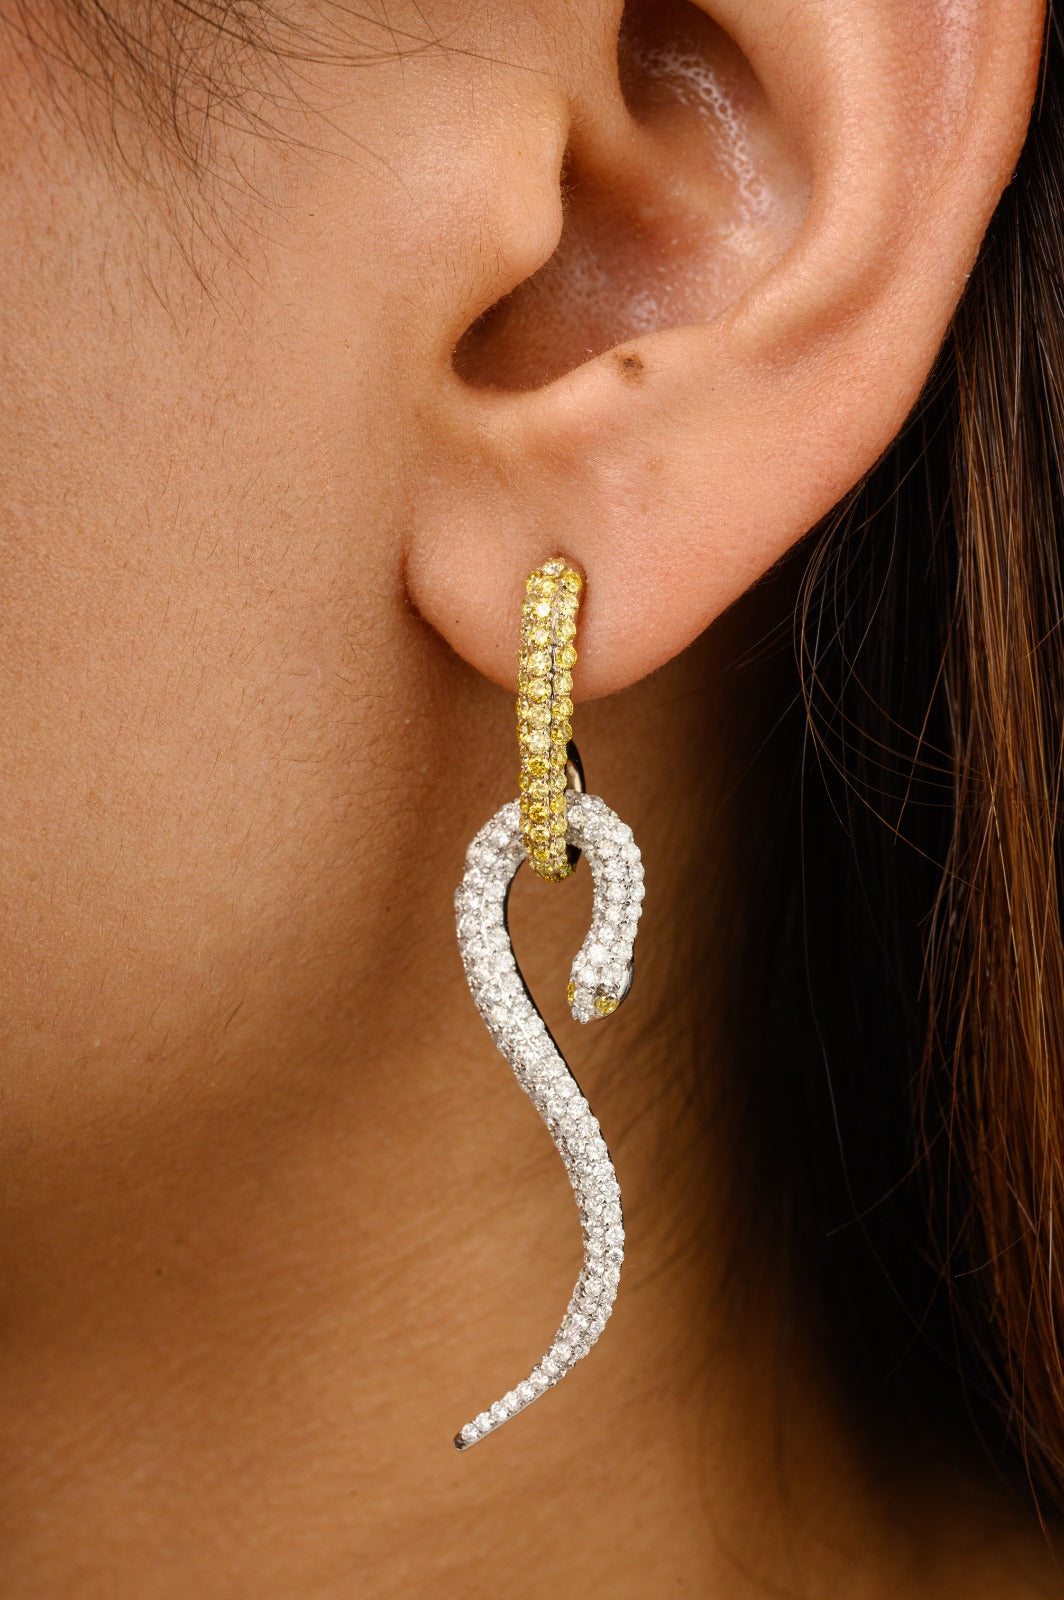 18K Solid White Gold Diamond Serpentine Earrings